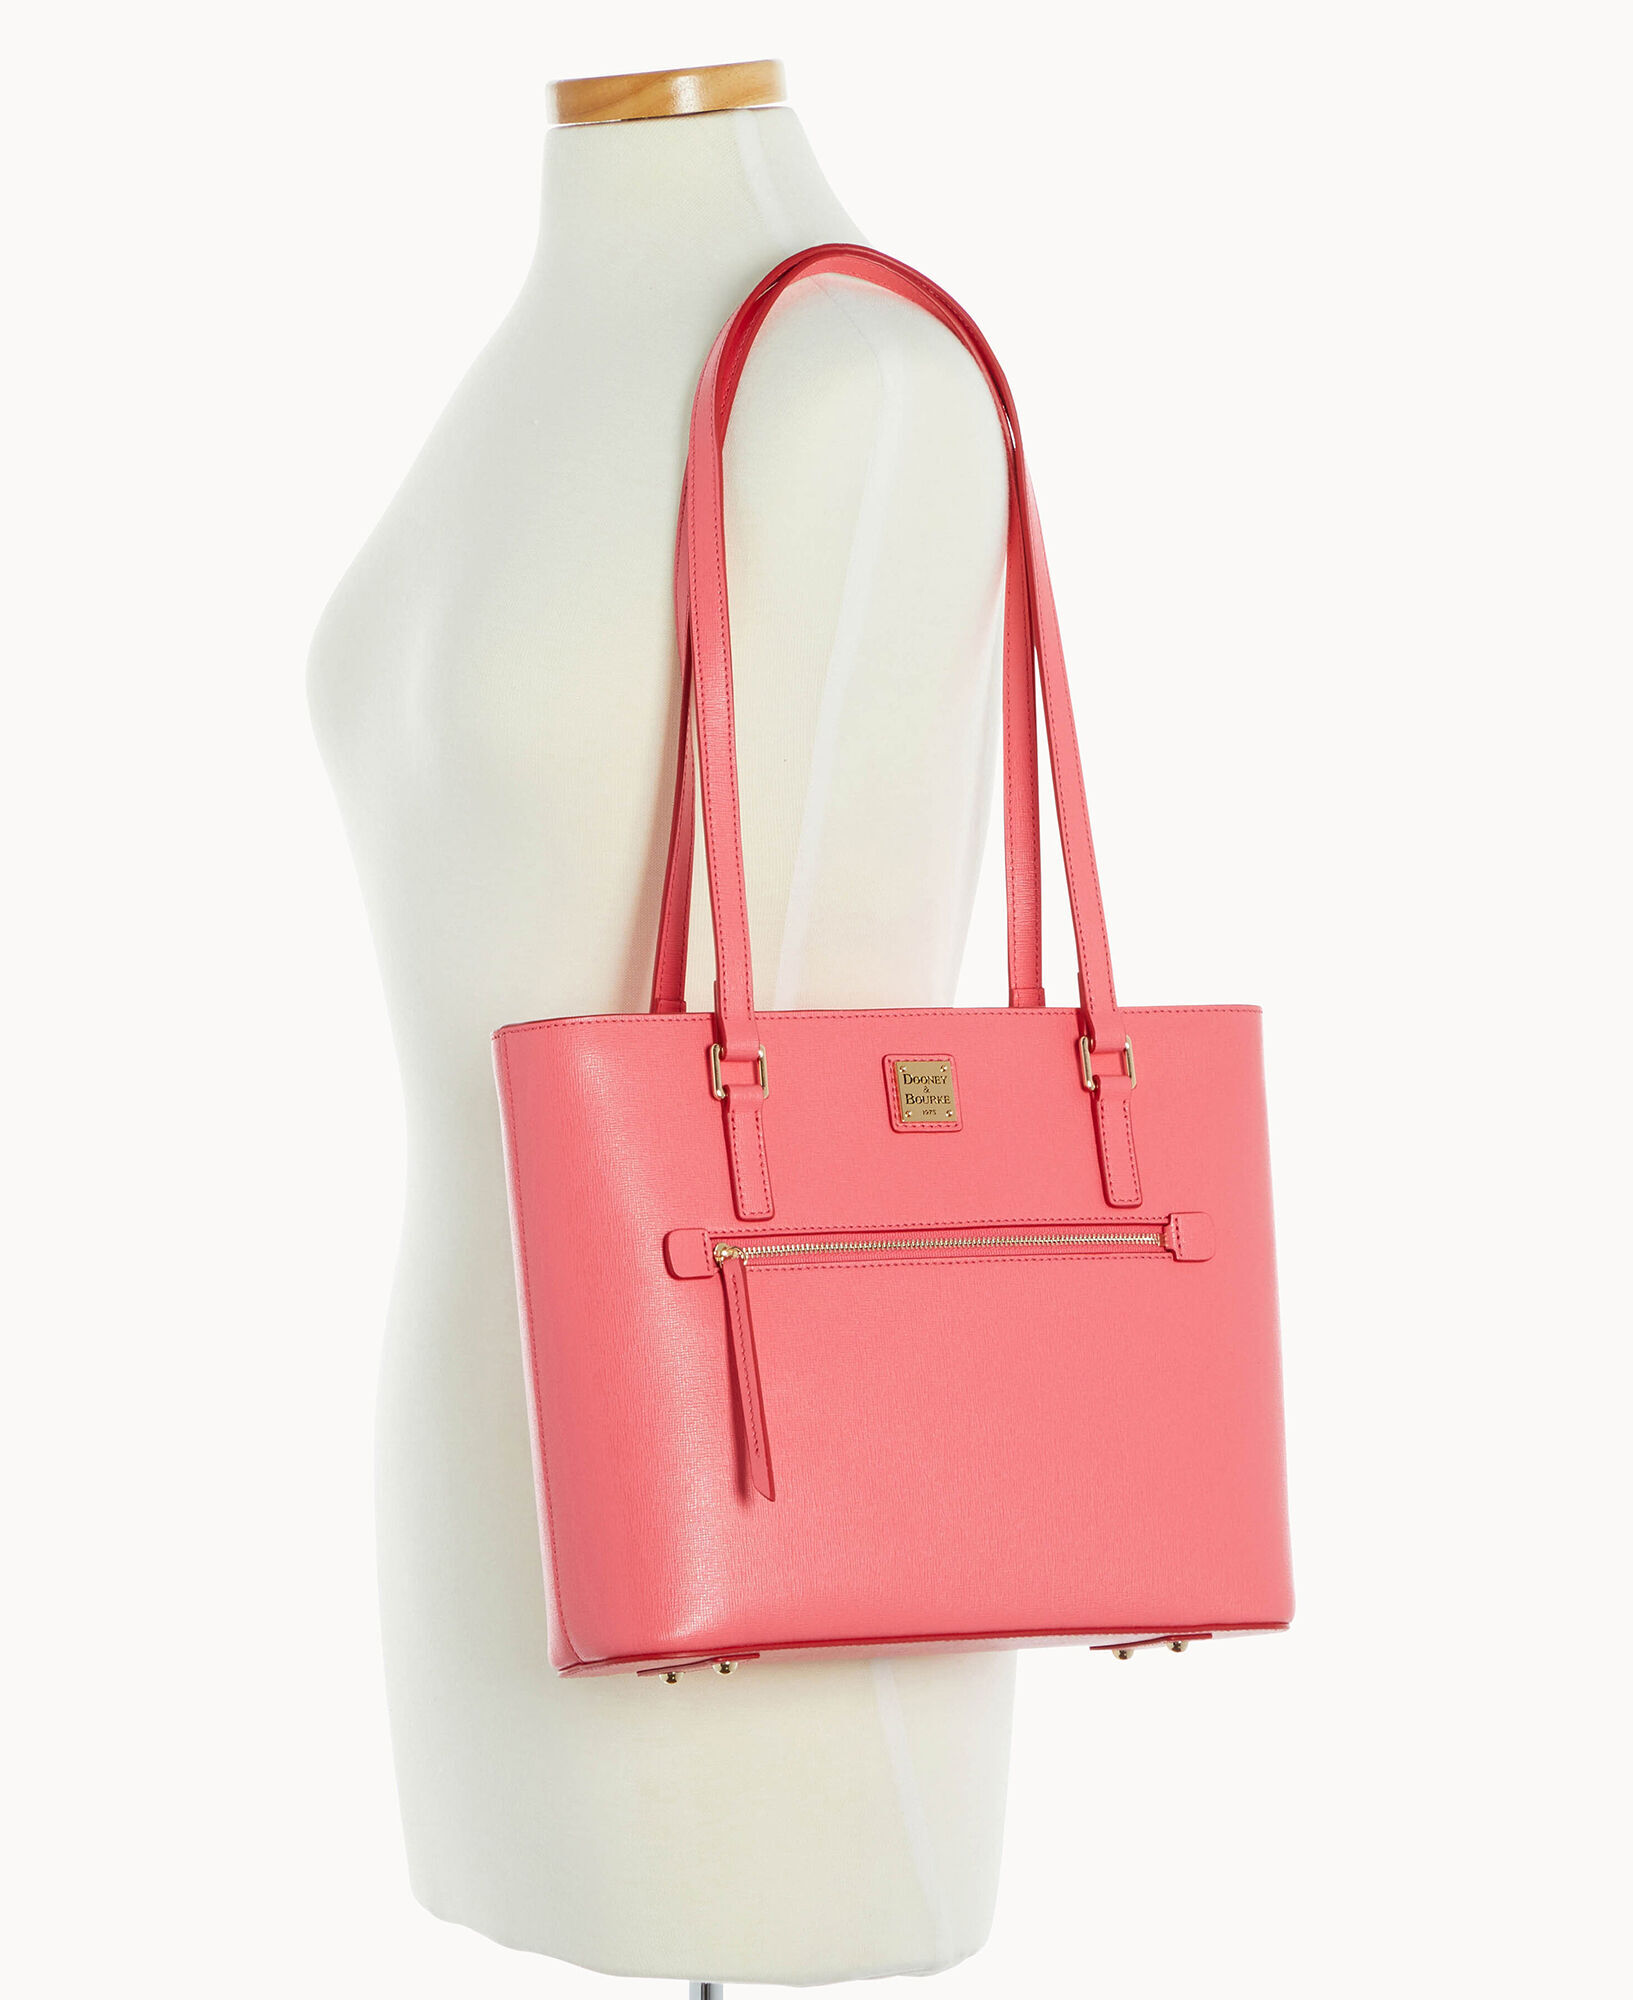 Dooney Bourke Saffiano Shopper Tote Bag, Pink